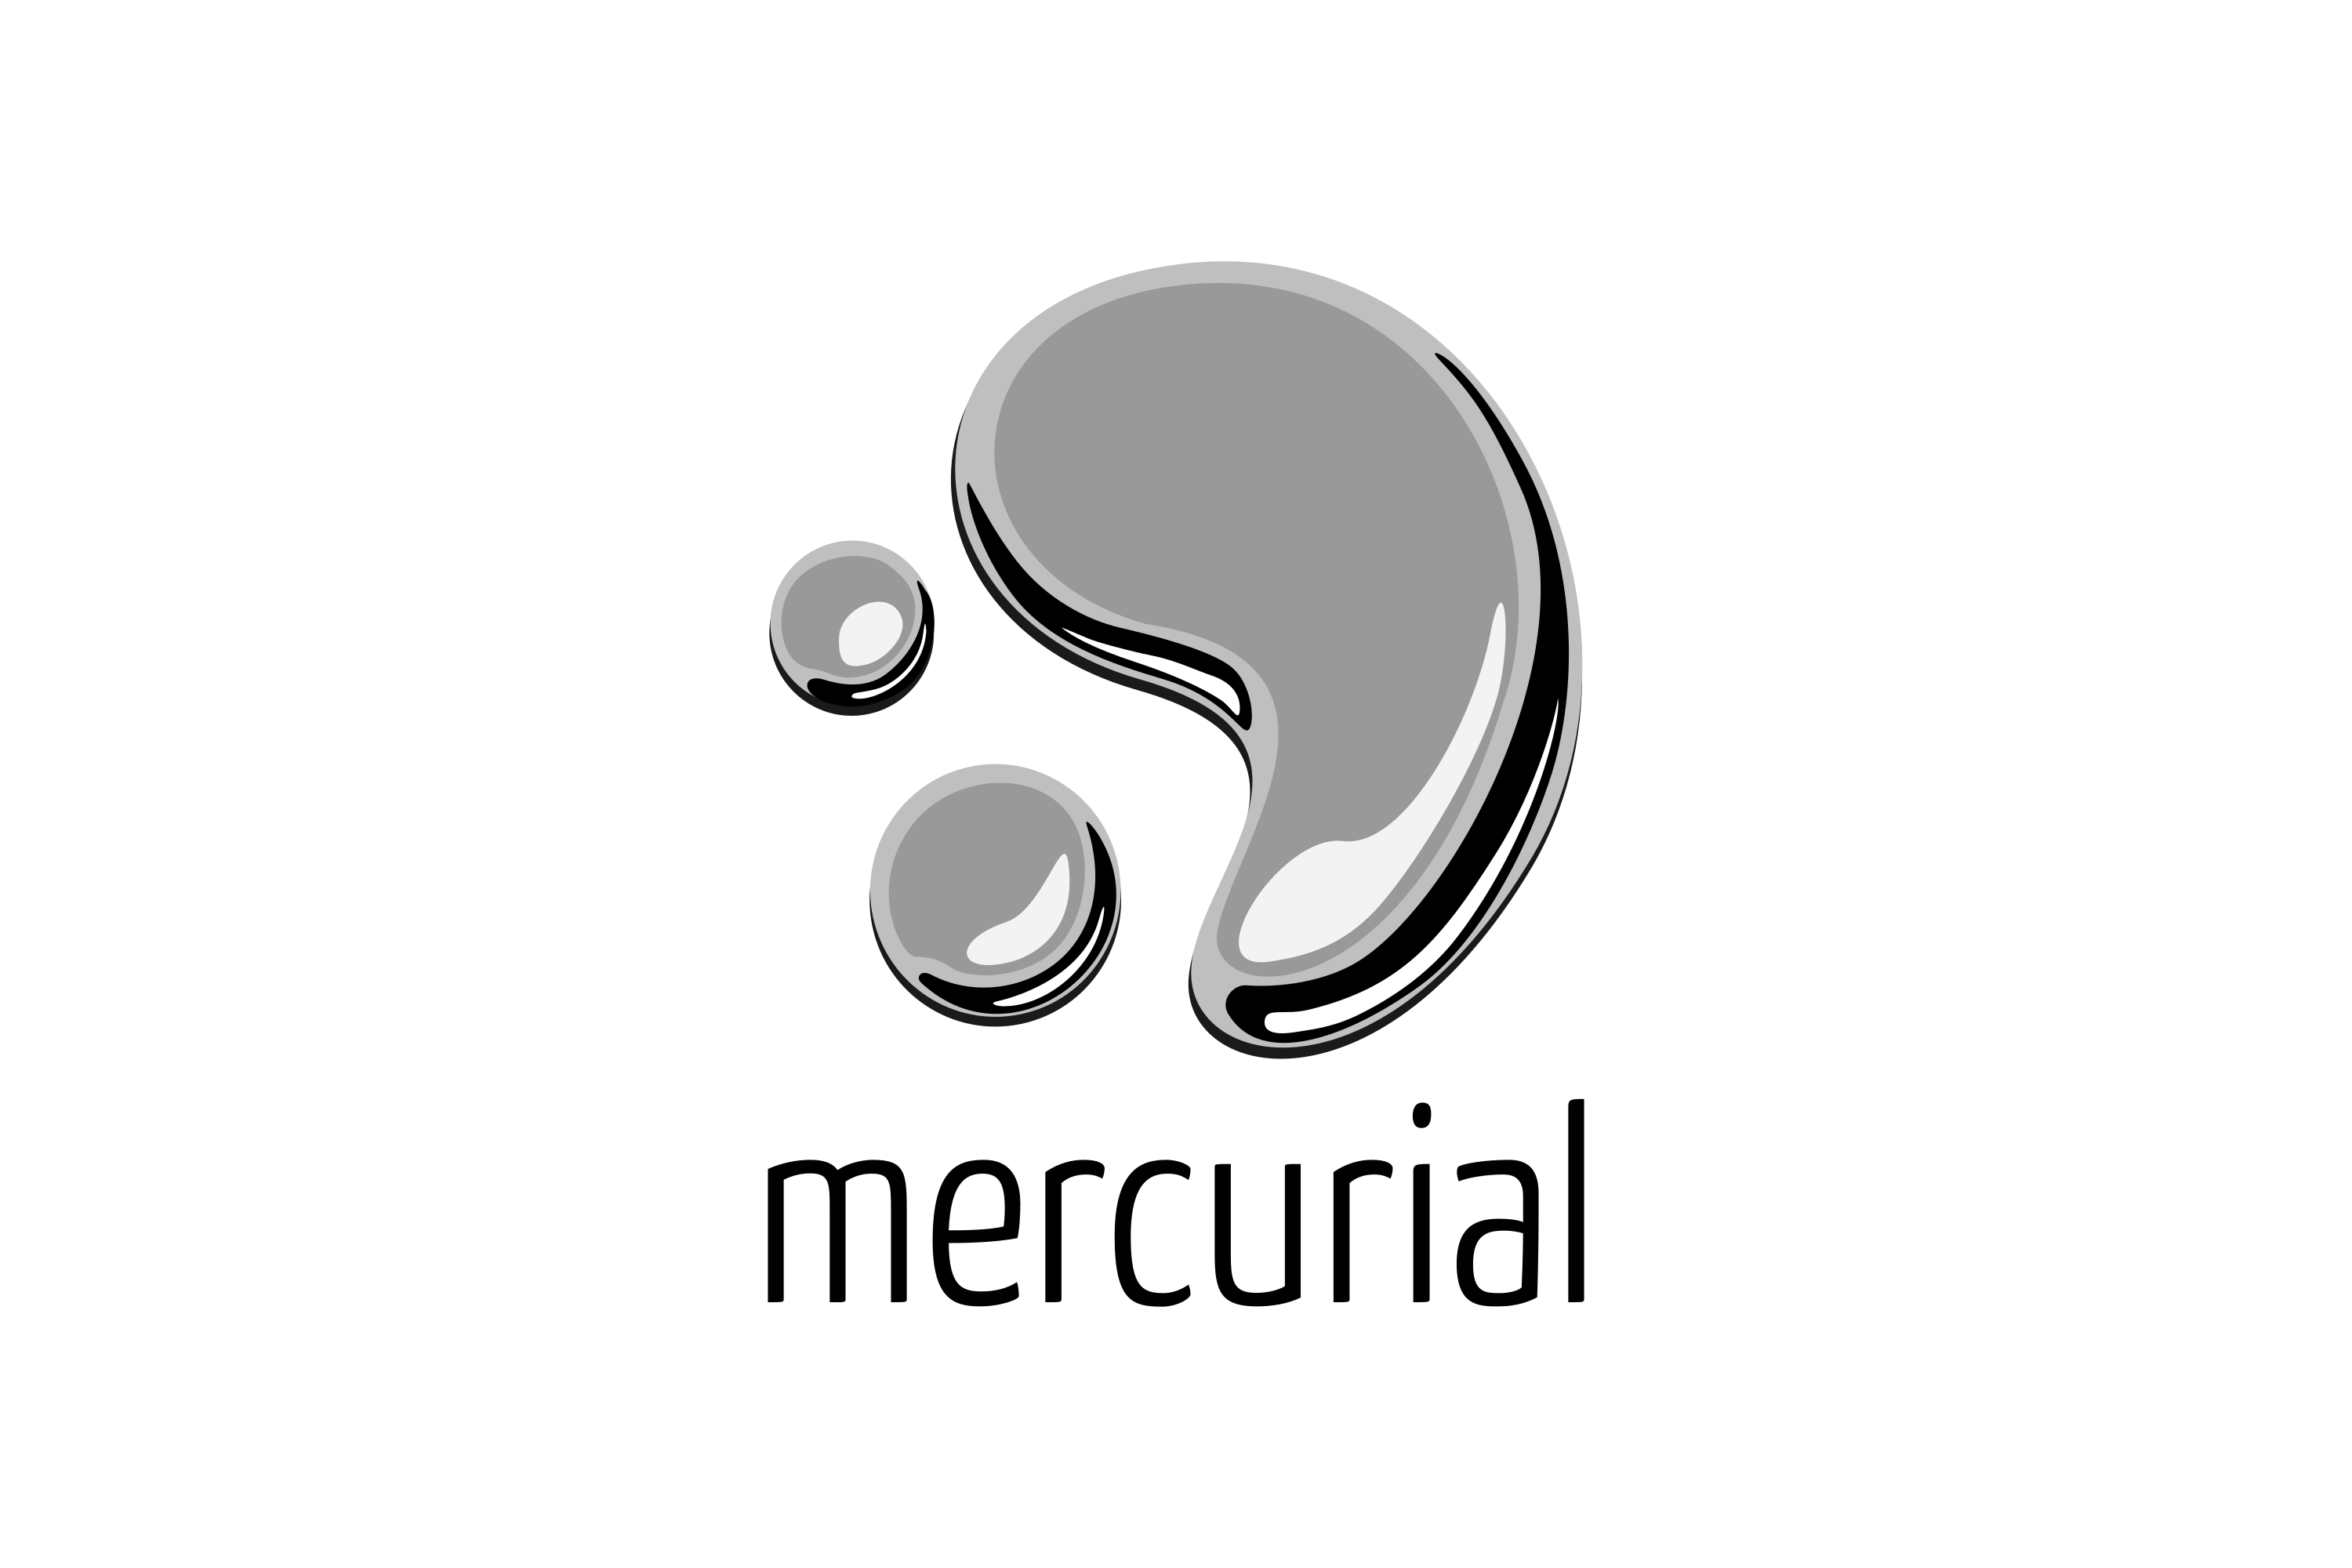 Download Mercurial (hg) Logo in SVG 